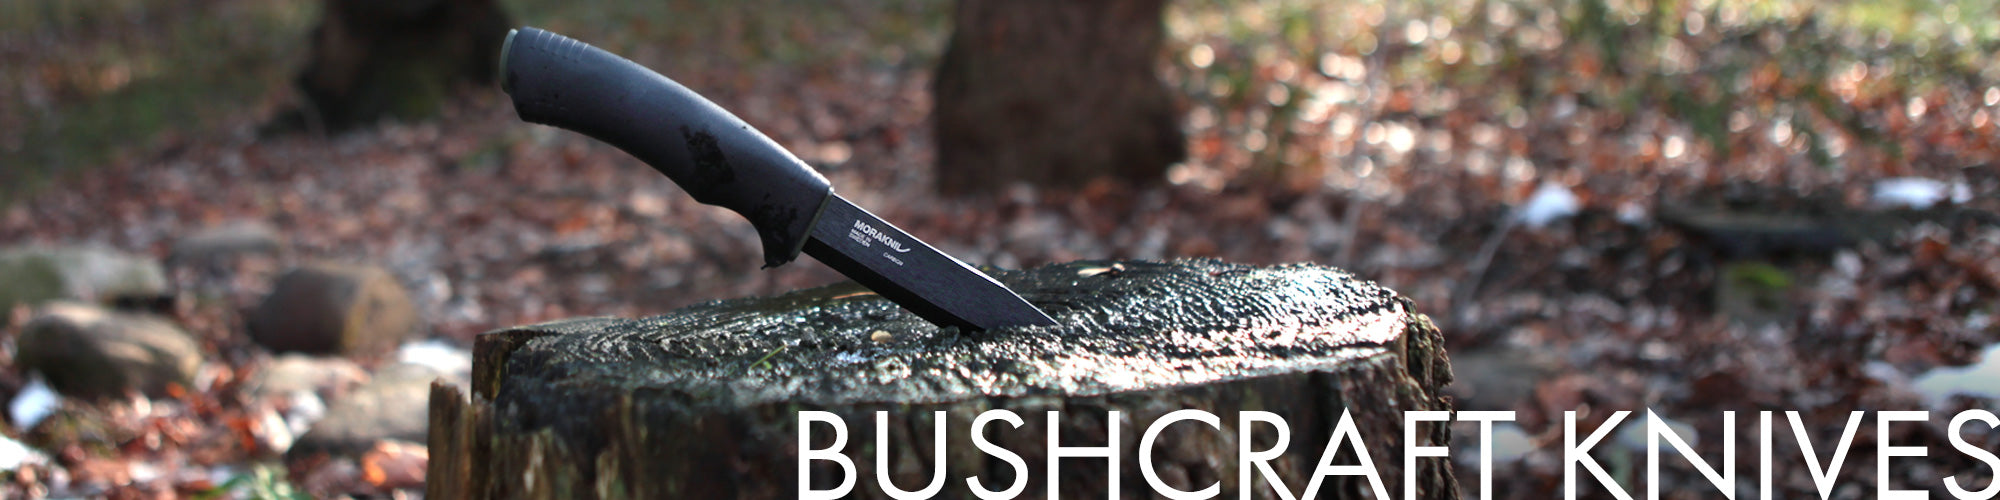 Bushcraft Knives for Sale